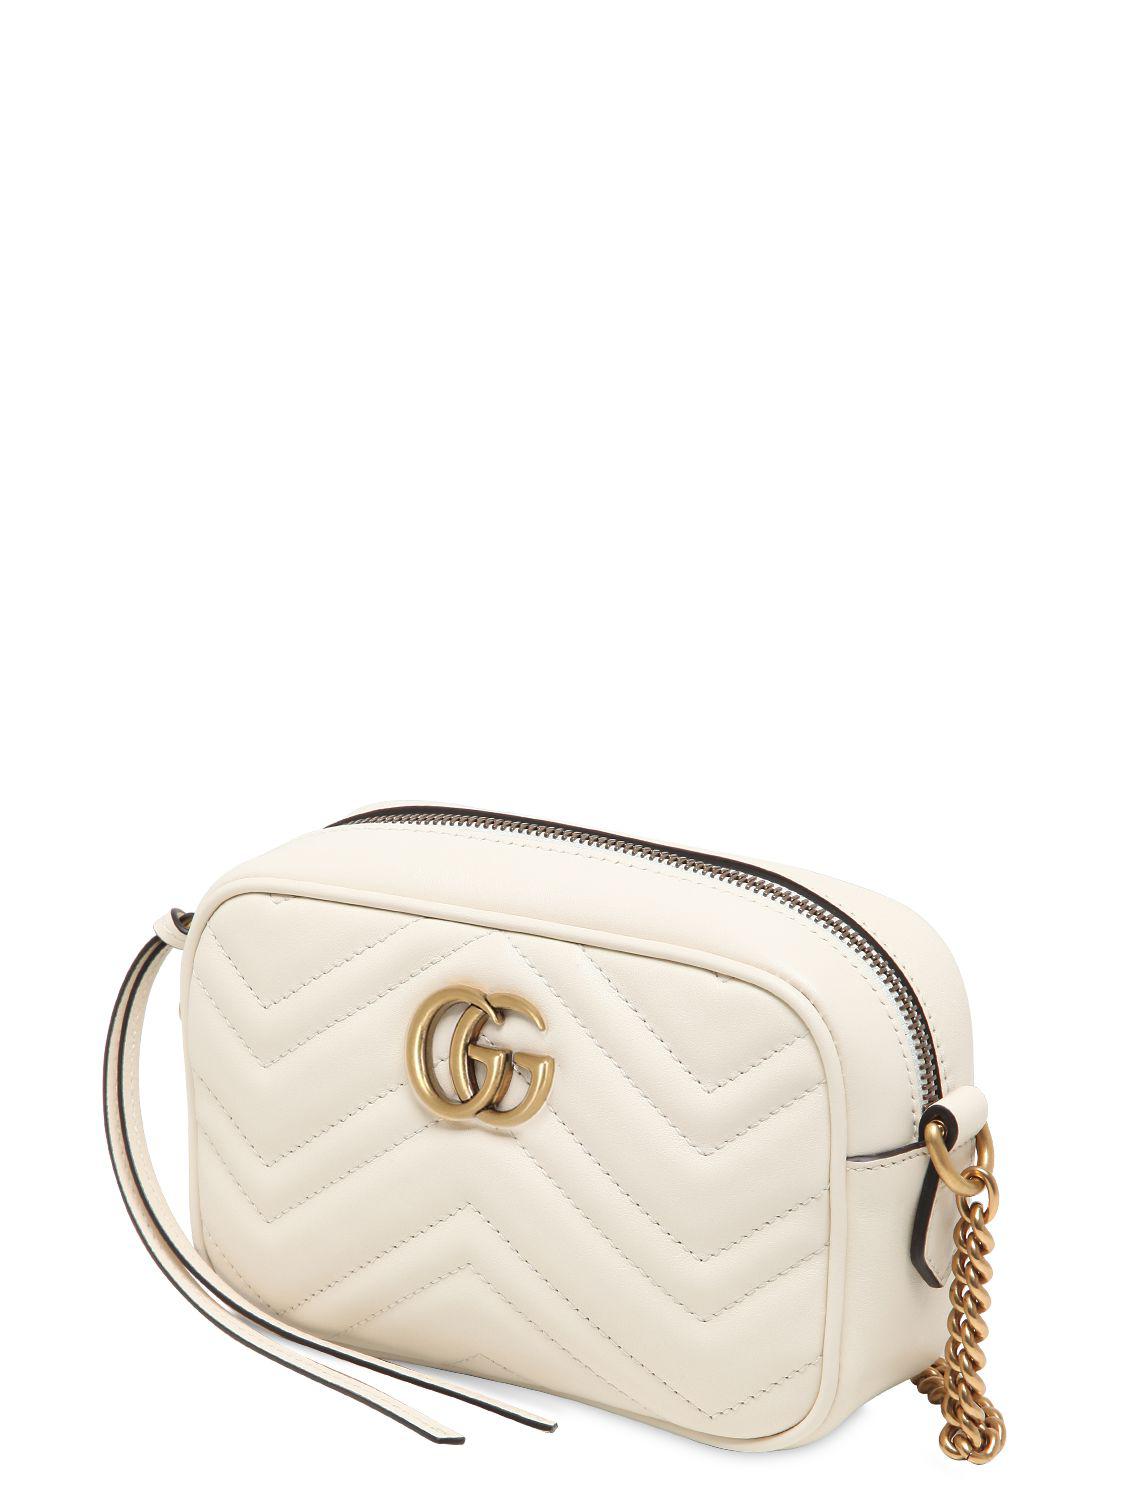 Gucci Mini Gg Marmont 2.0 Leather Camera Bag in White - Lyst